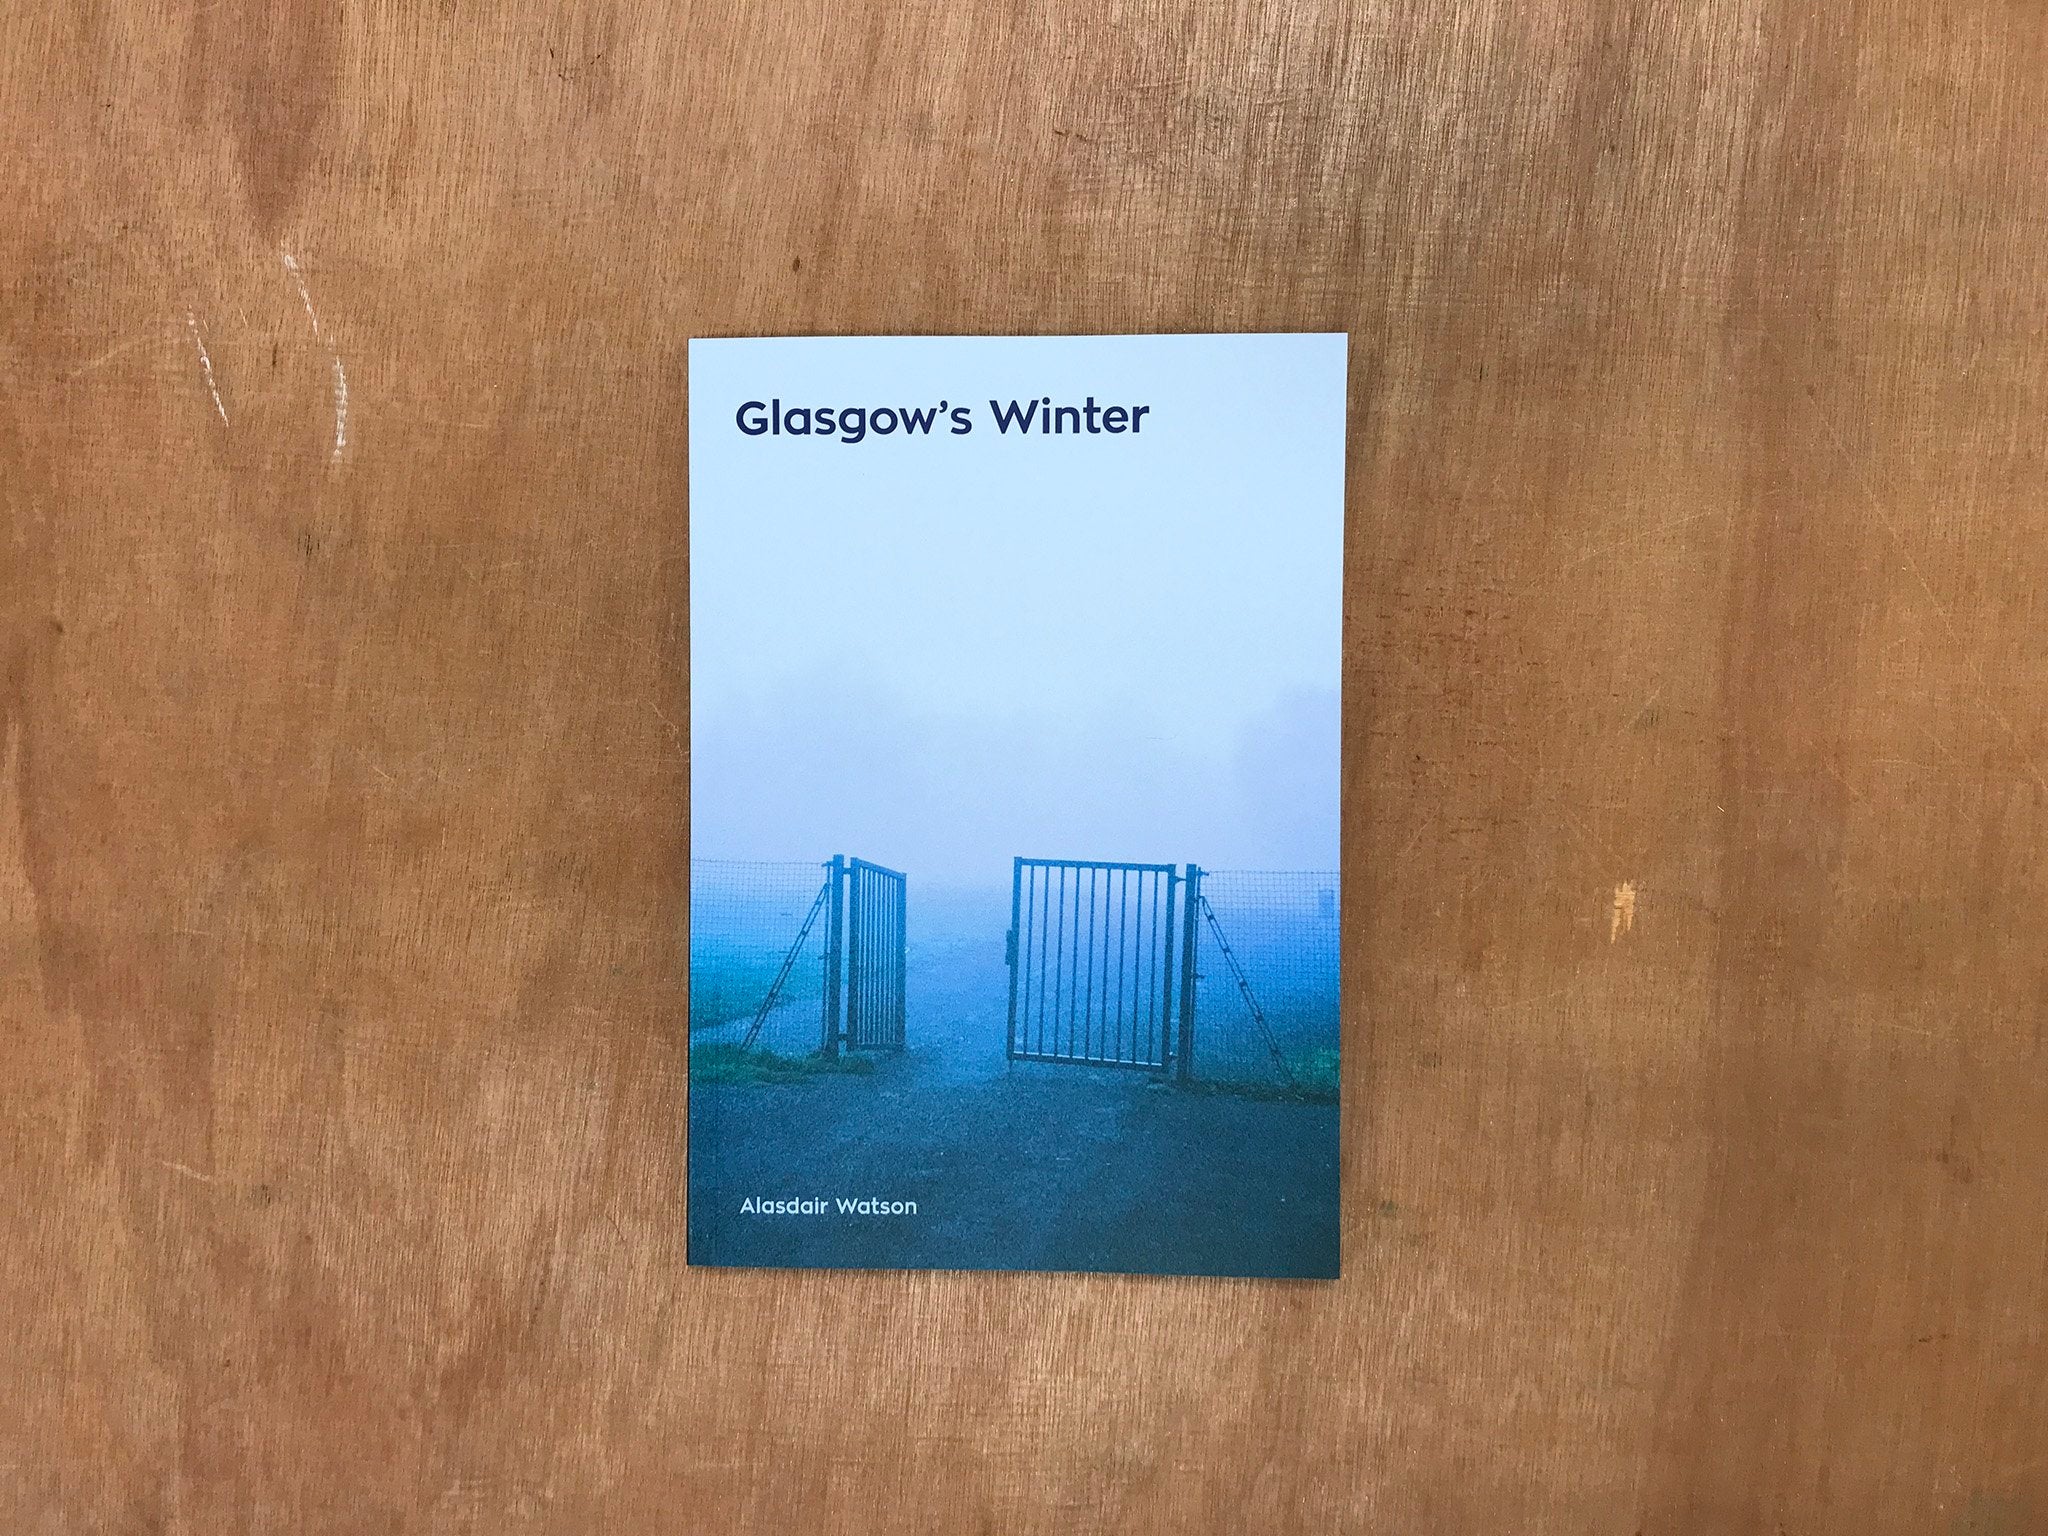 GLASGOW'S WINTER by Alasdair Watson